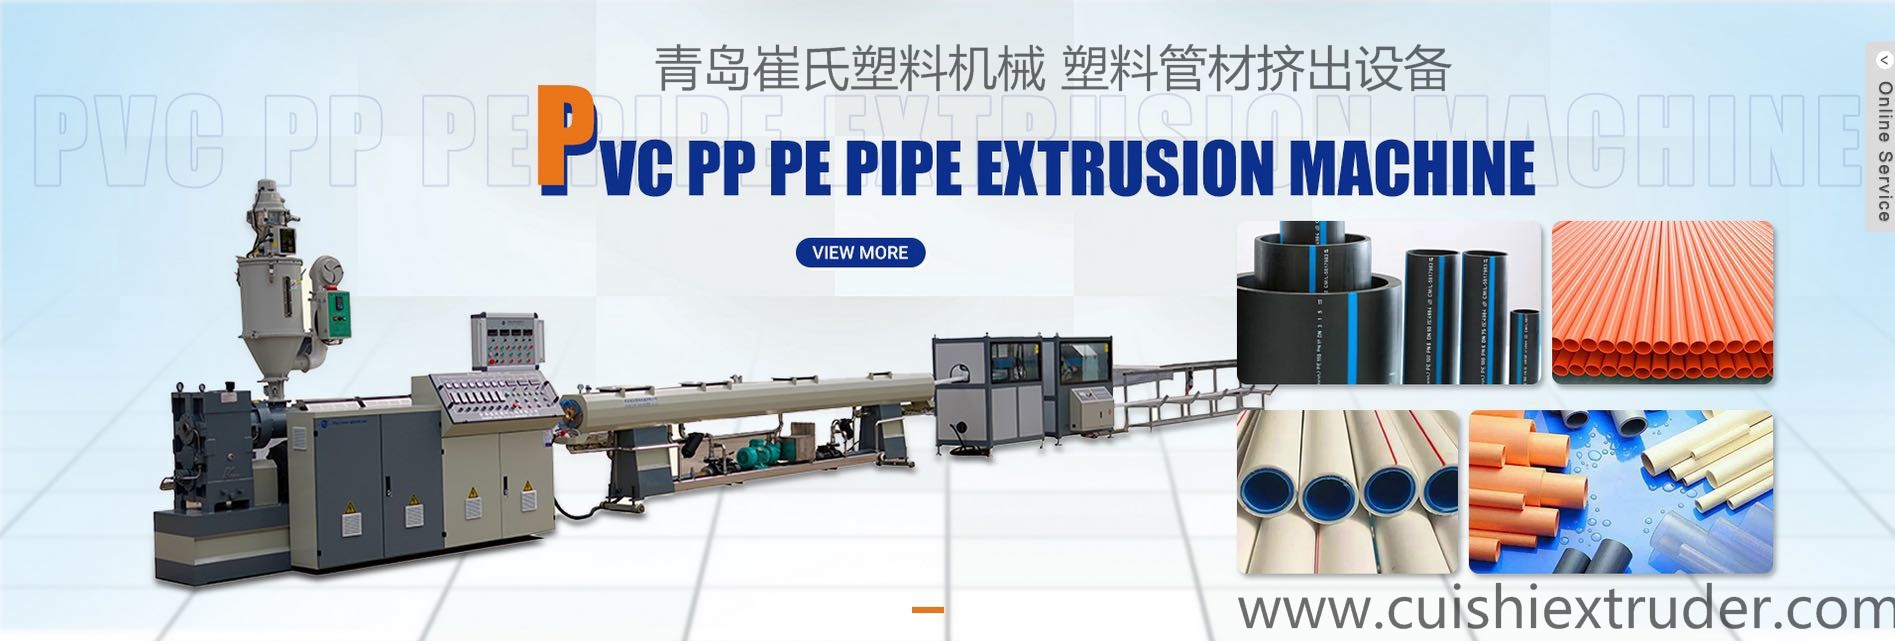 PVC Pipe Extrusion Machine 63-160MM